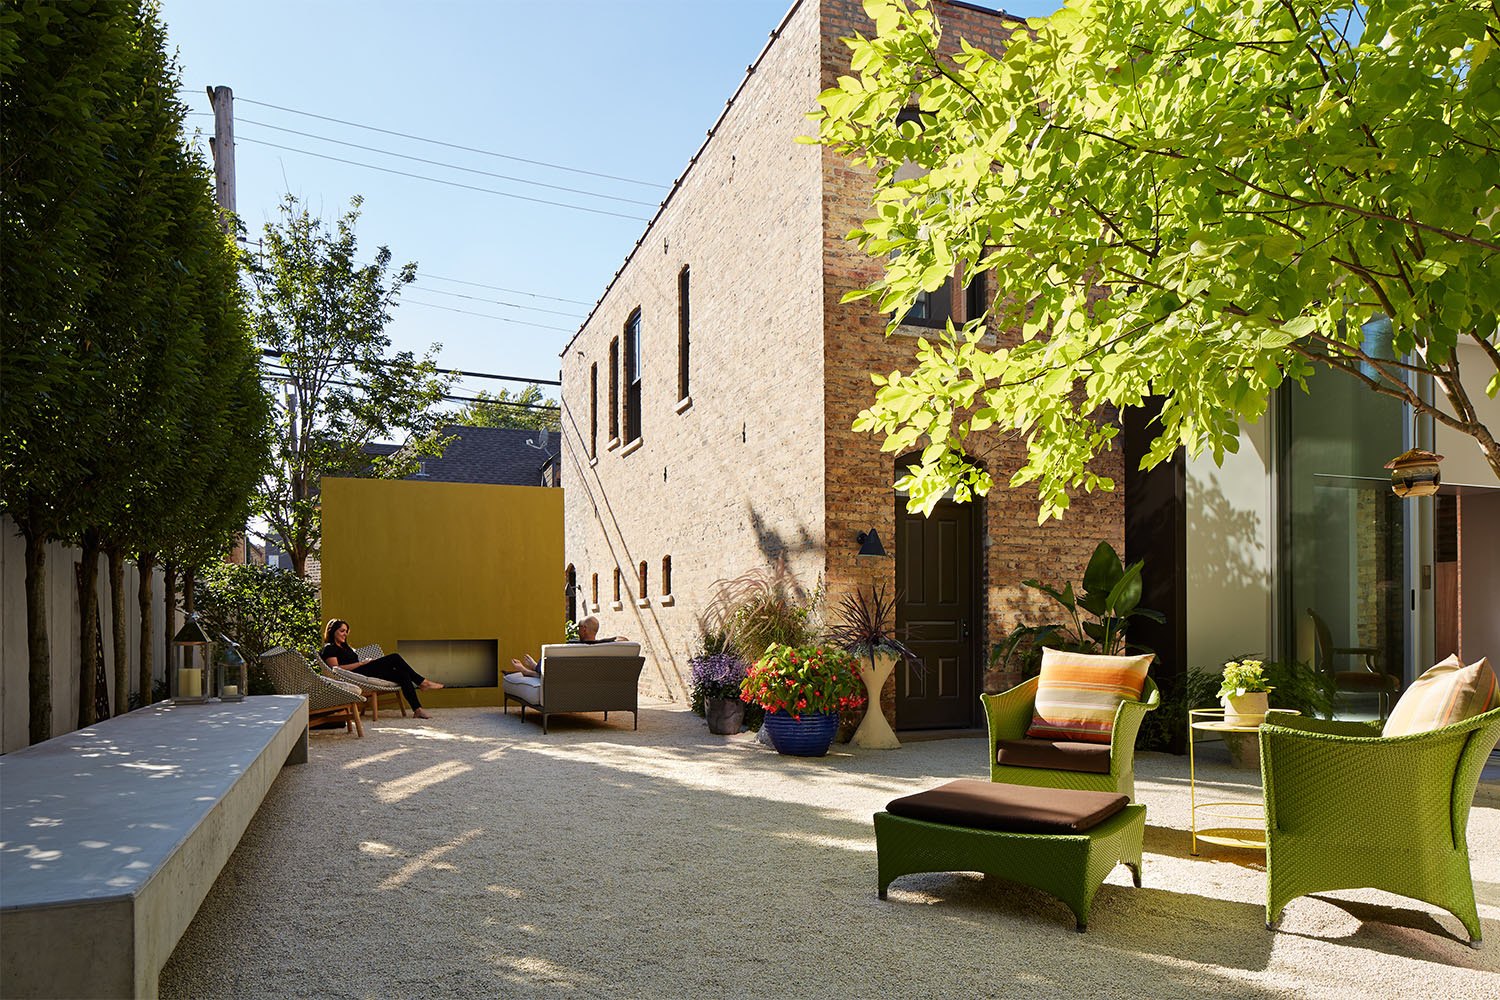 Custom Home Builders Chicago - Wicker Park Residence backyard patio